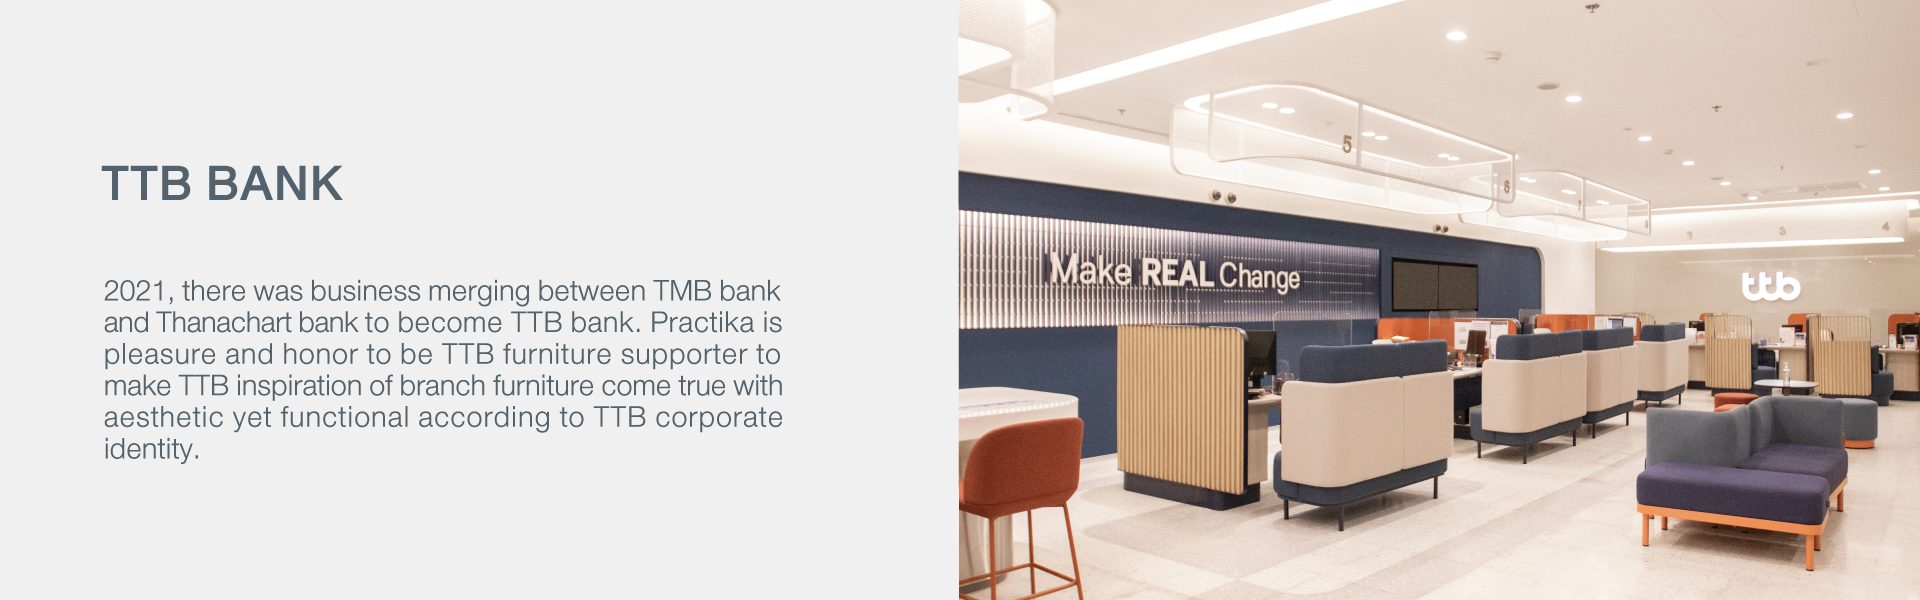 TTB Bank